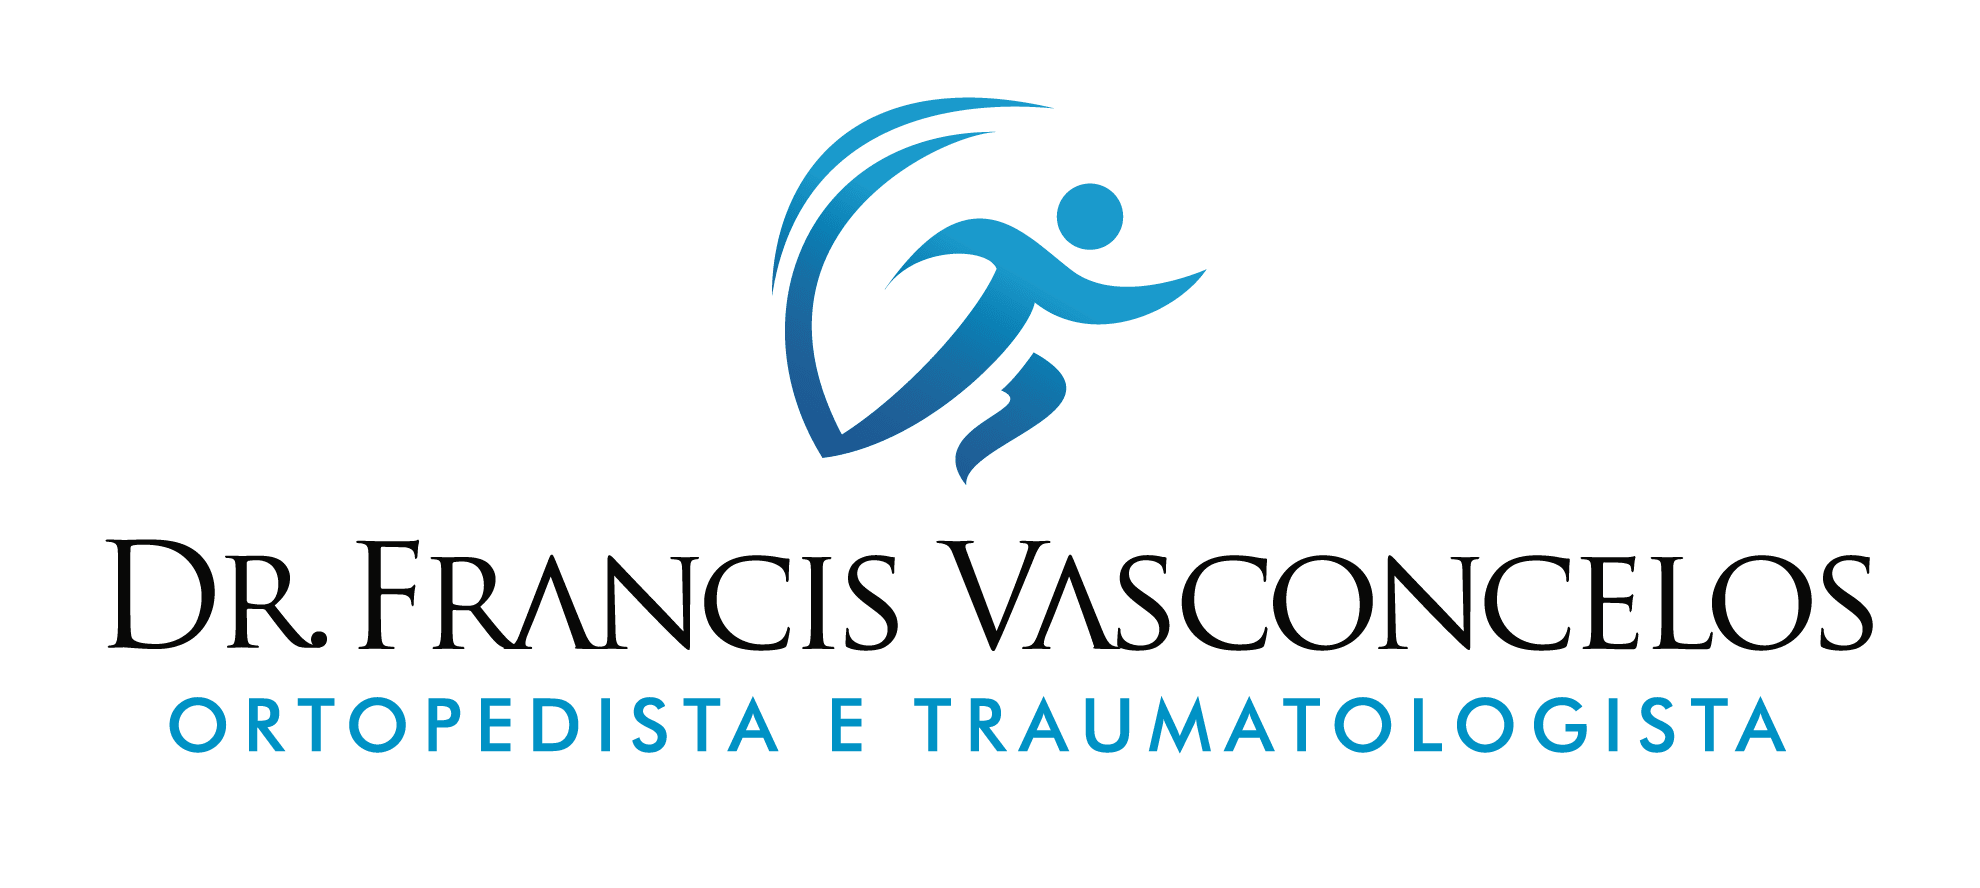 Dr. Francis Vasconcelos